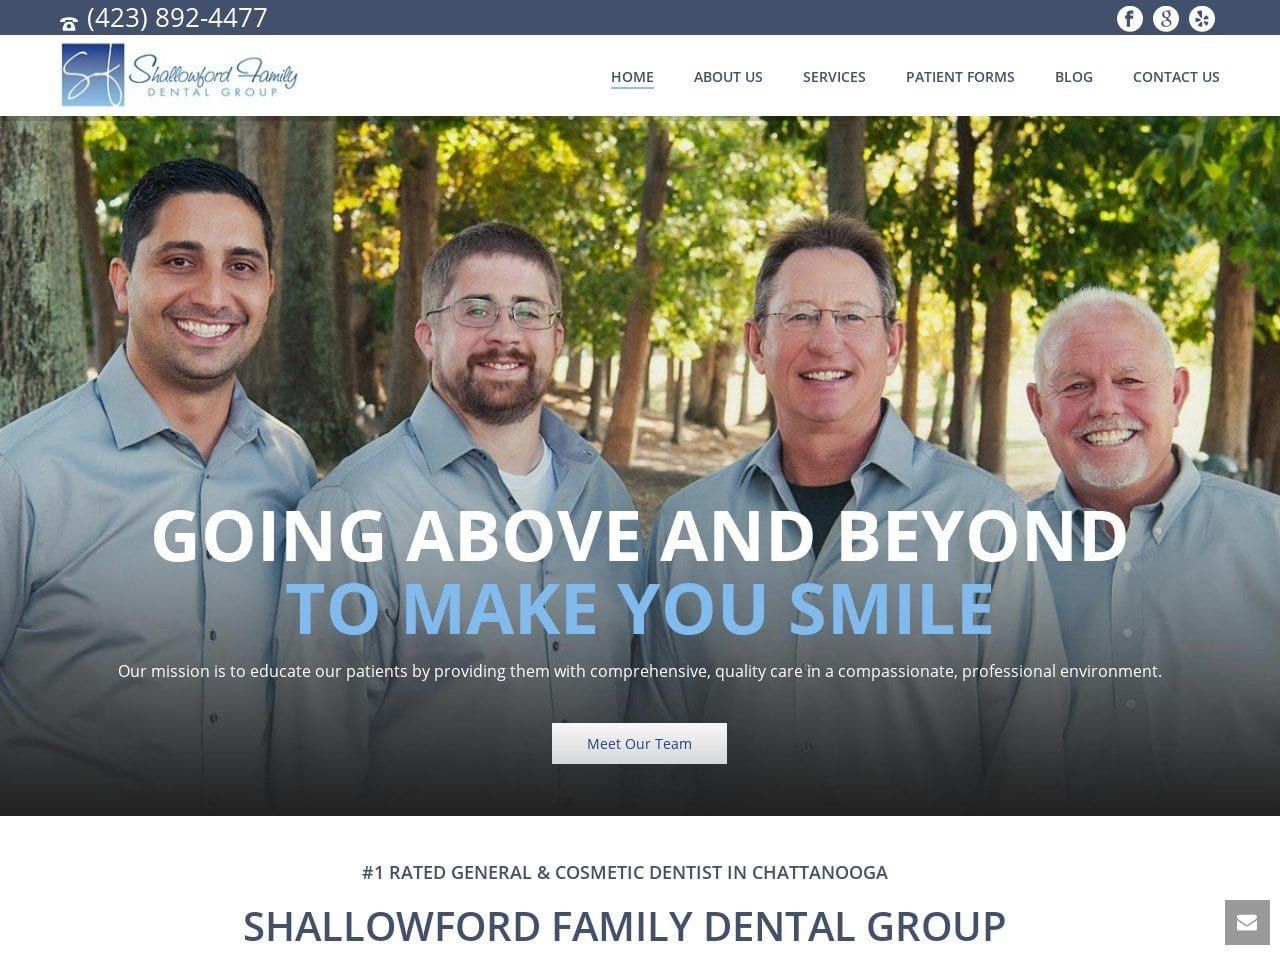 Shallowford Family Dental Group Website Screenshot from shallowfordfamilydental.com